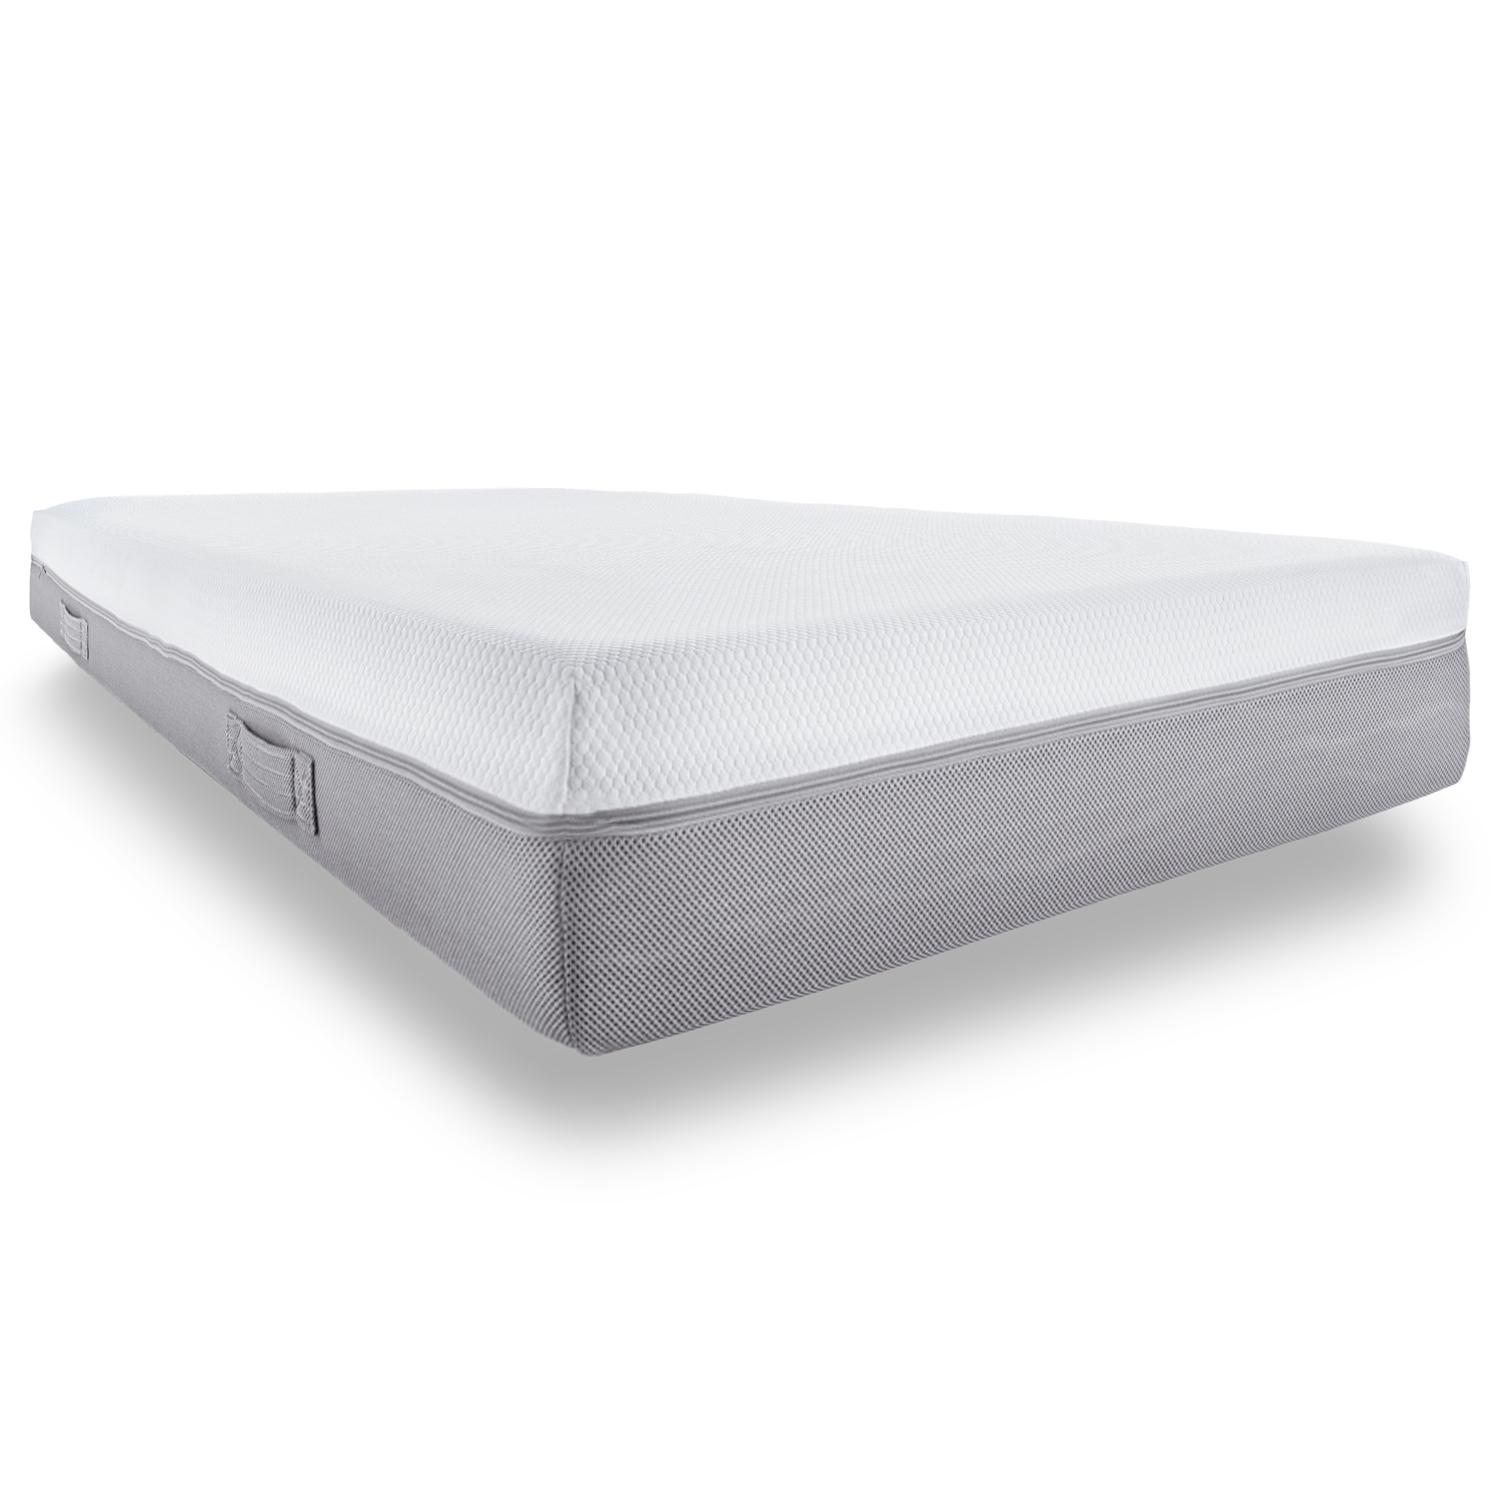 Sleezzz Premium viscoelastic mattress 100 x 200 cm, height 20 cm, firmness level H2/H3, with reversible handles